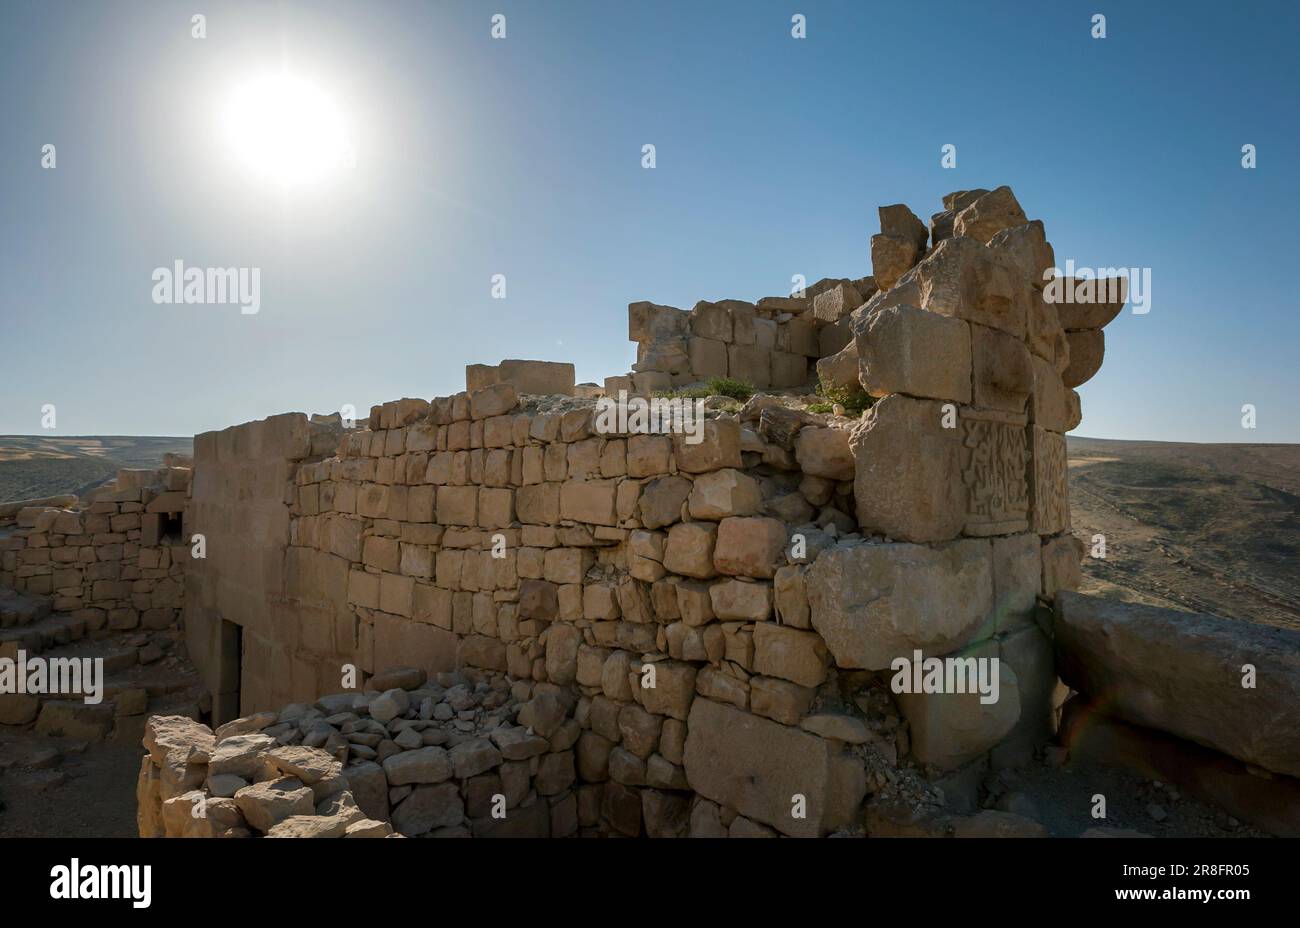 Stone blocks with Arabic script located on an exterior wall of Shobak Castle (Shoubak) in Jordan. Stock Photo